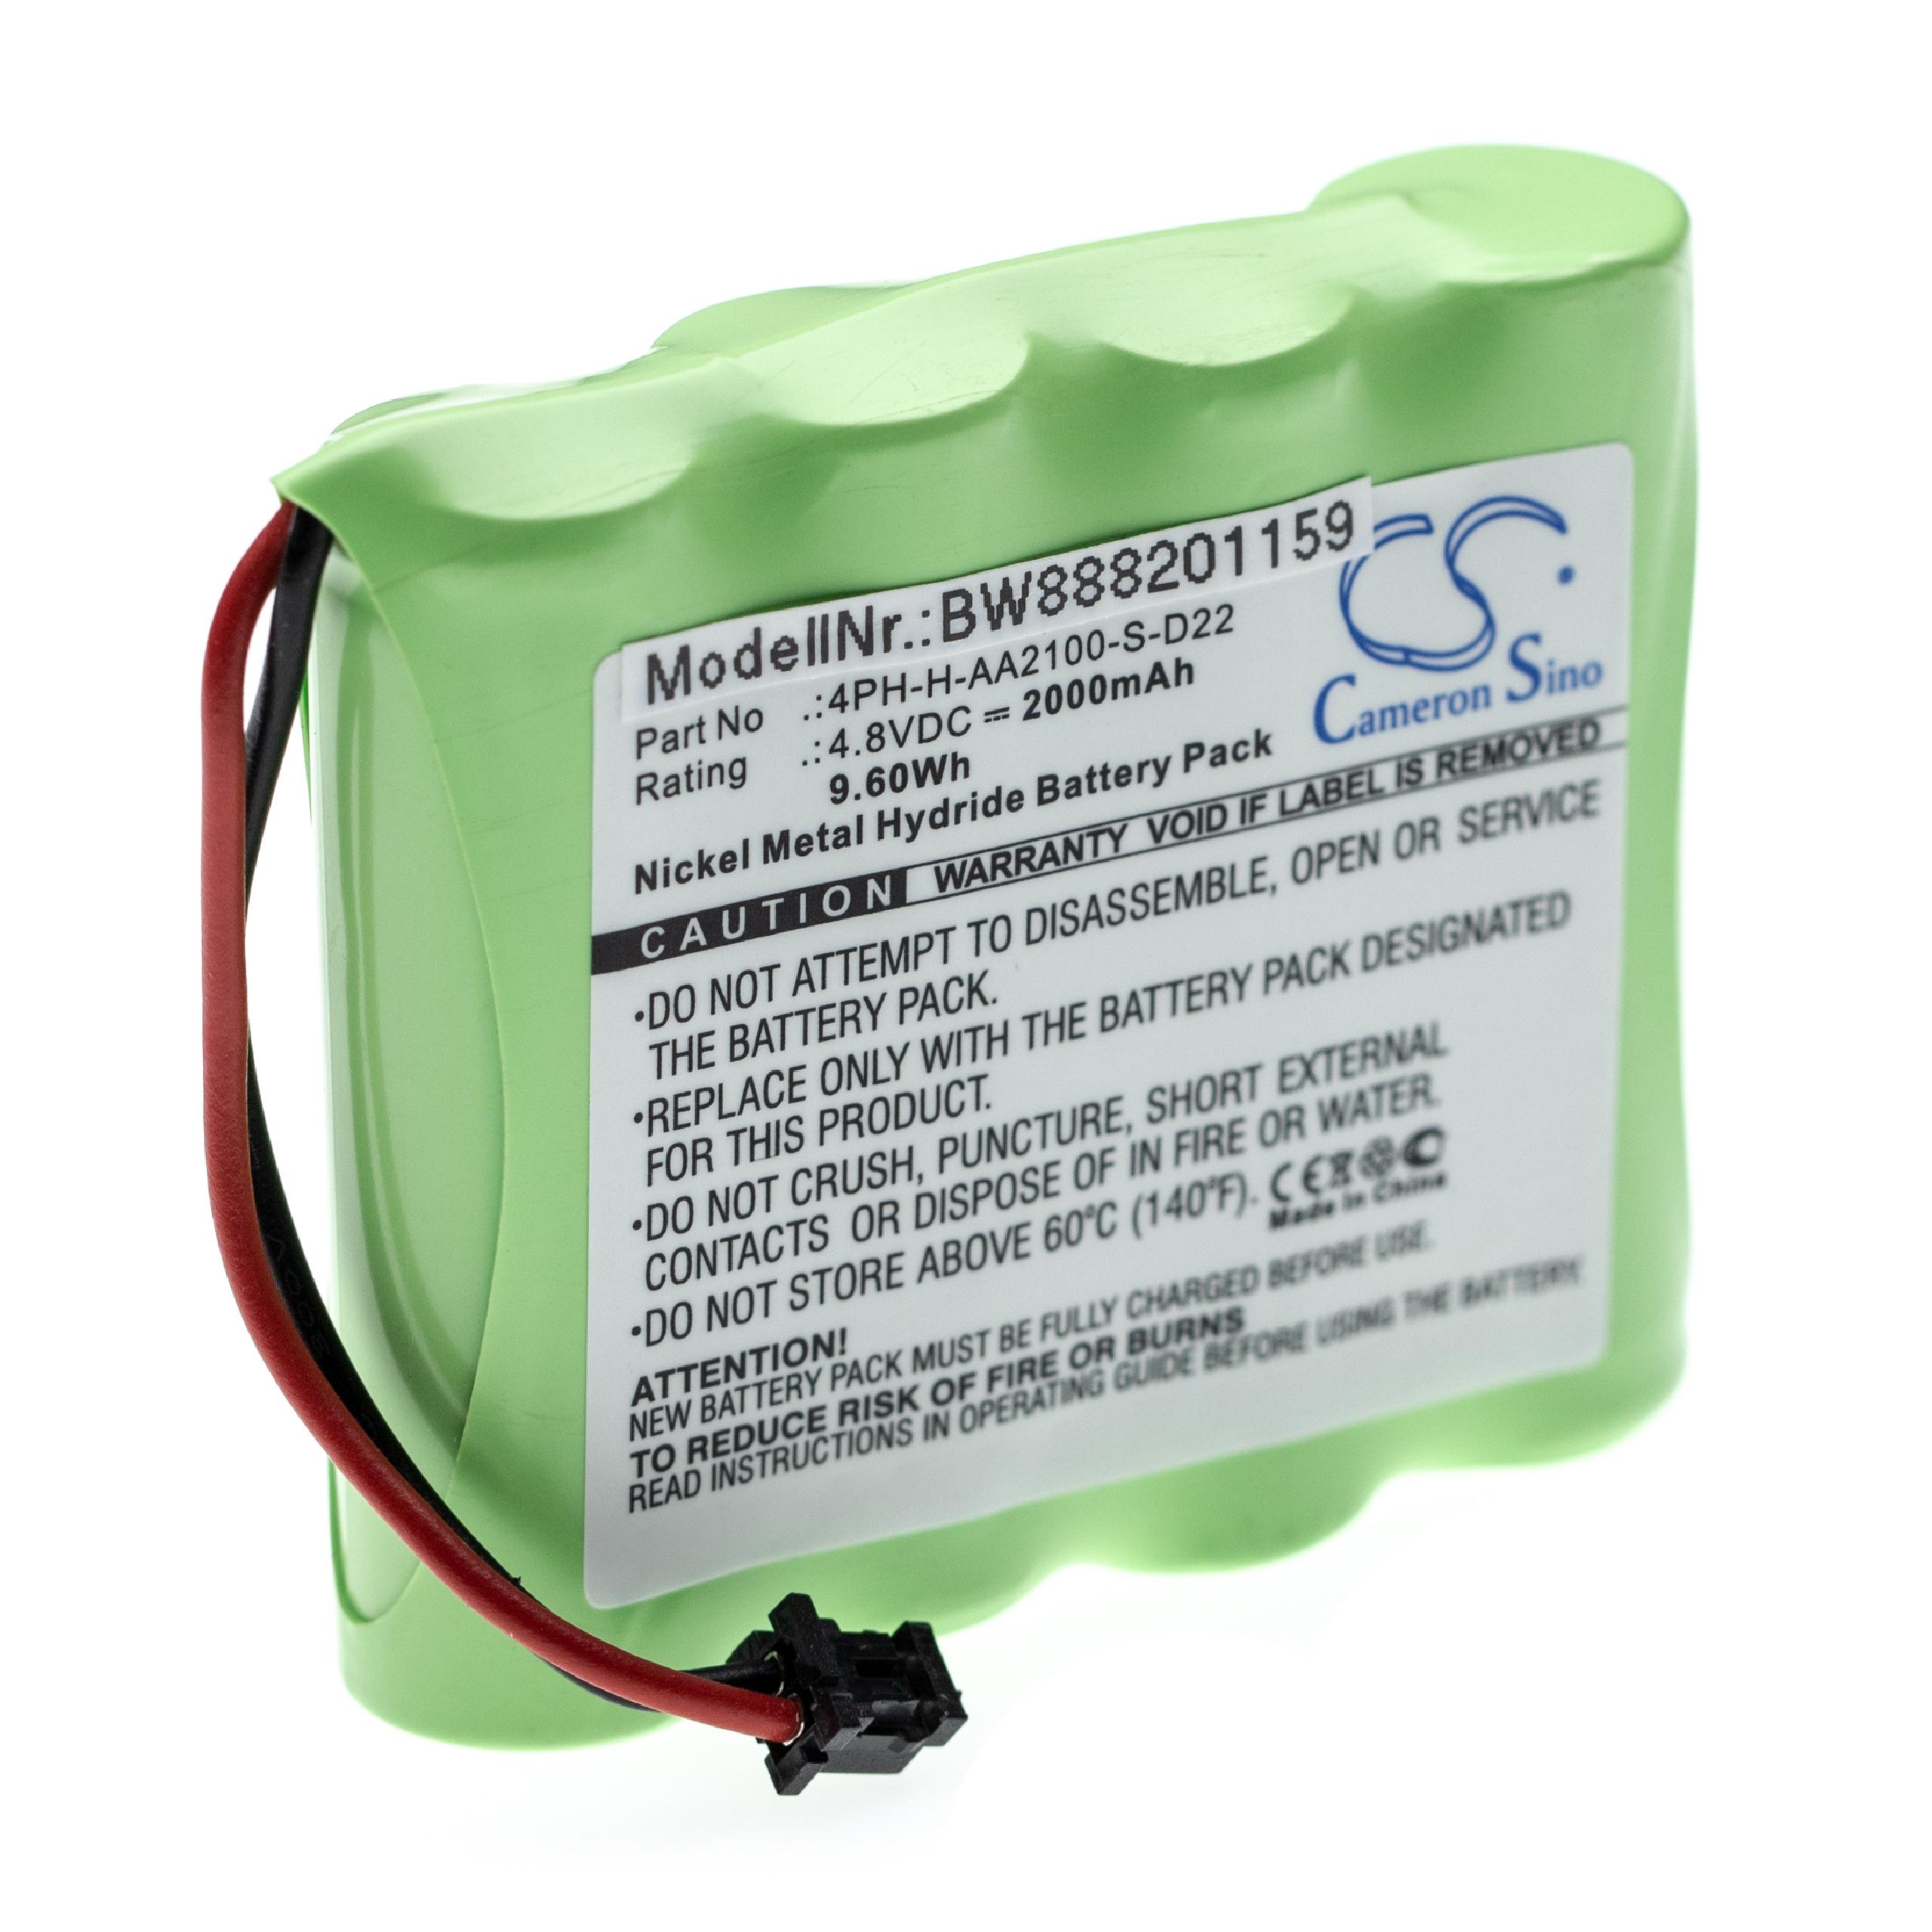 Batteria sostituisce DSC 17000153, 4PH-H-AA2100-S-D22, BATT2148V per sistema d'allarme DSC - 2000mAh 4,8V NiMH